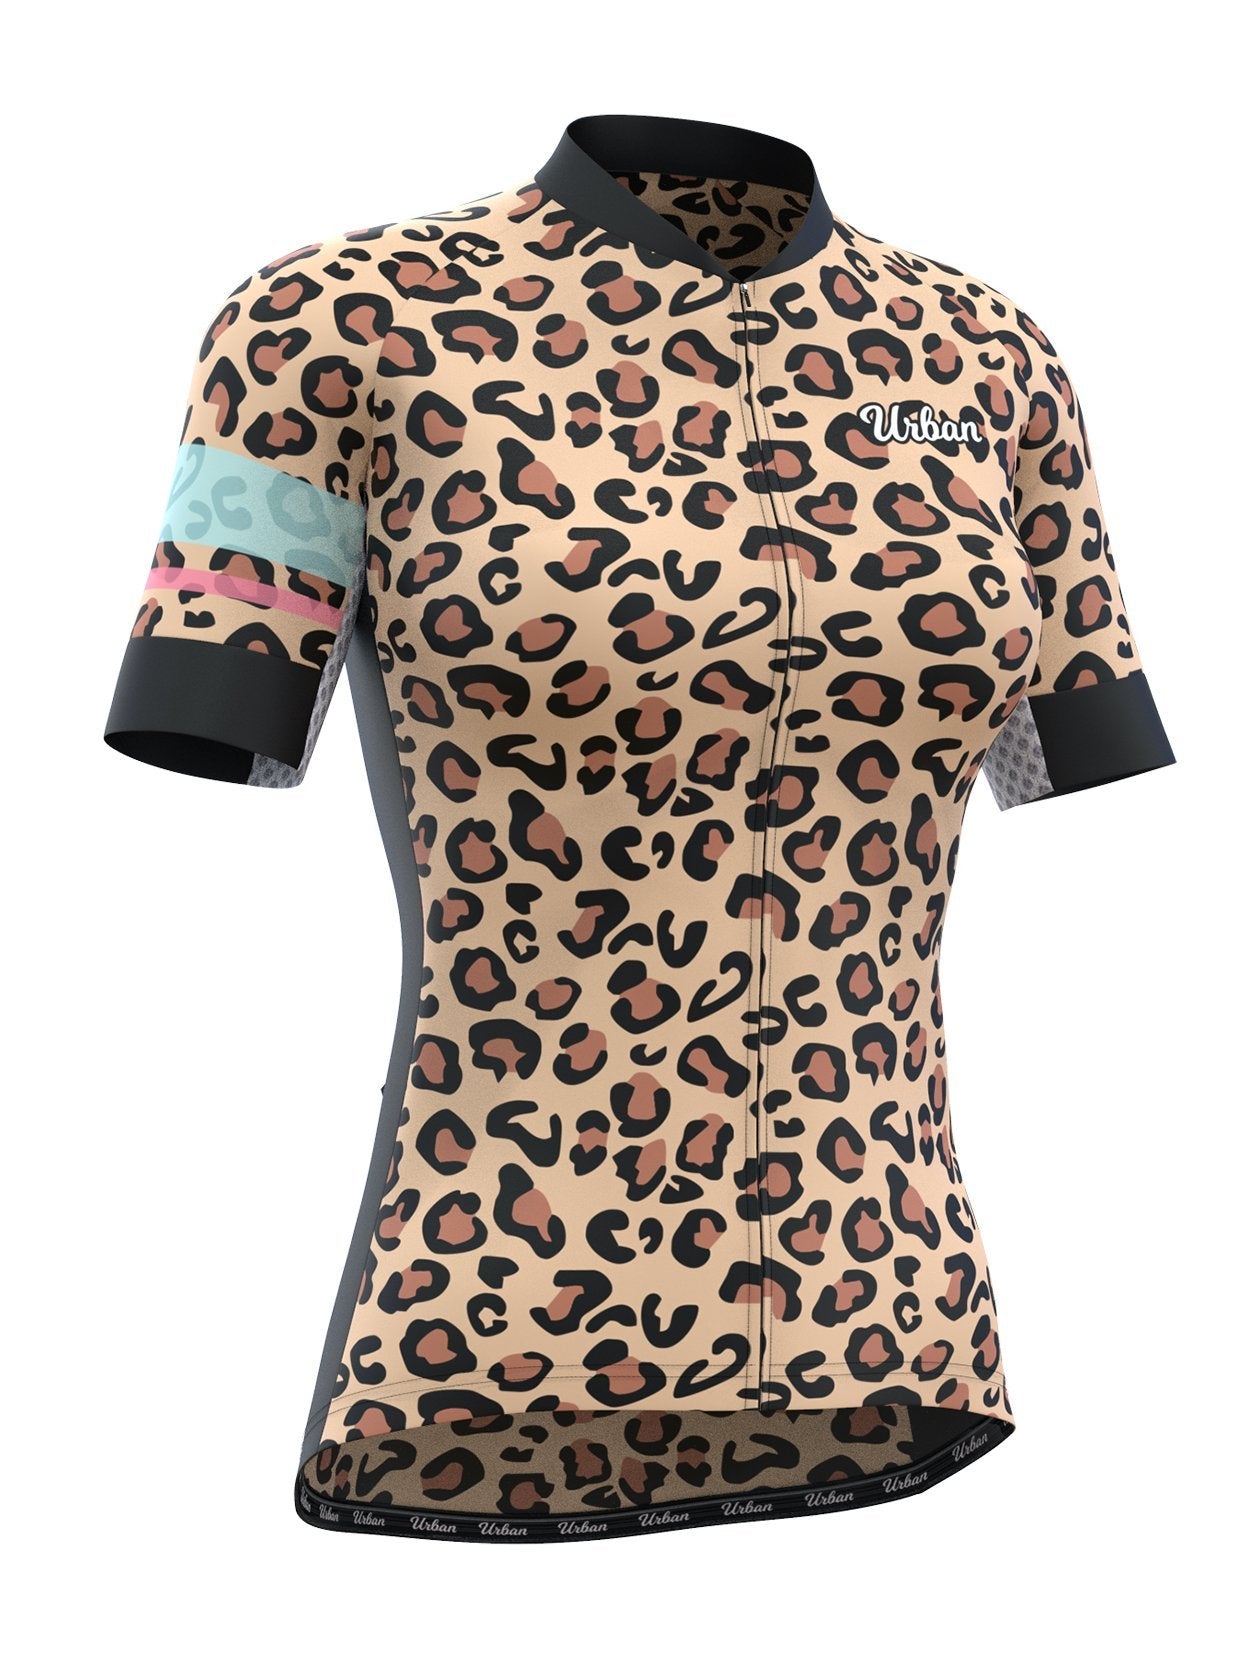 Padded ladies cycling underwear briefs - Leopard print